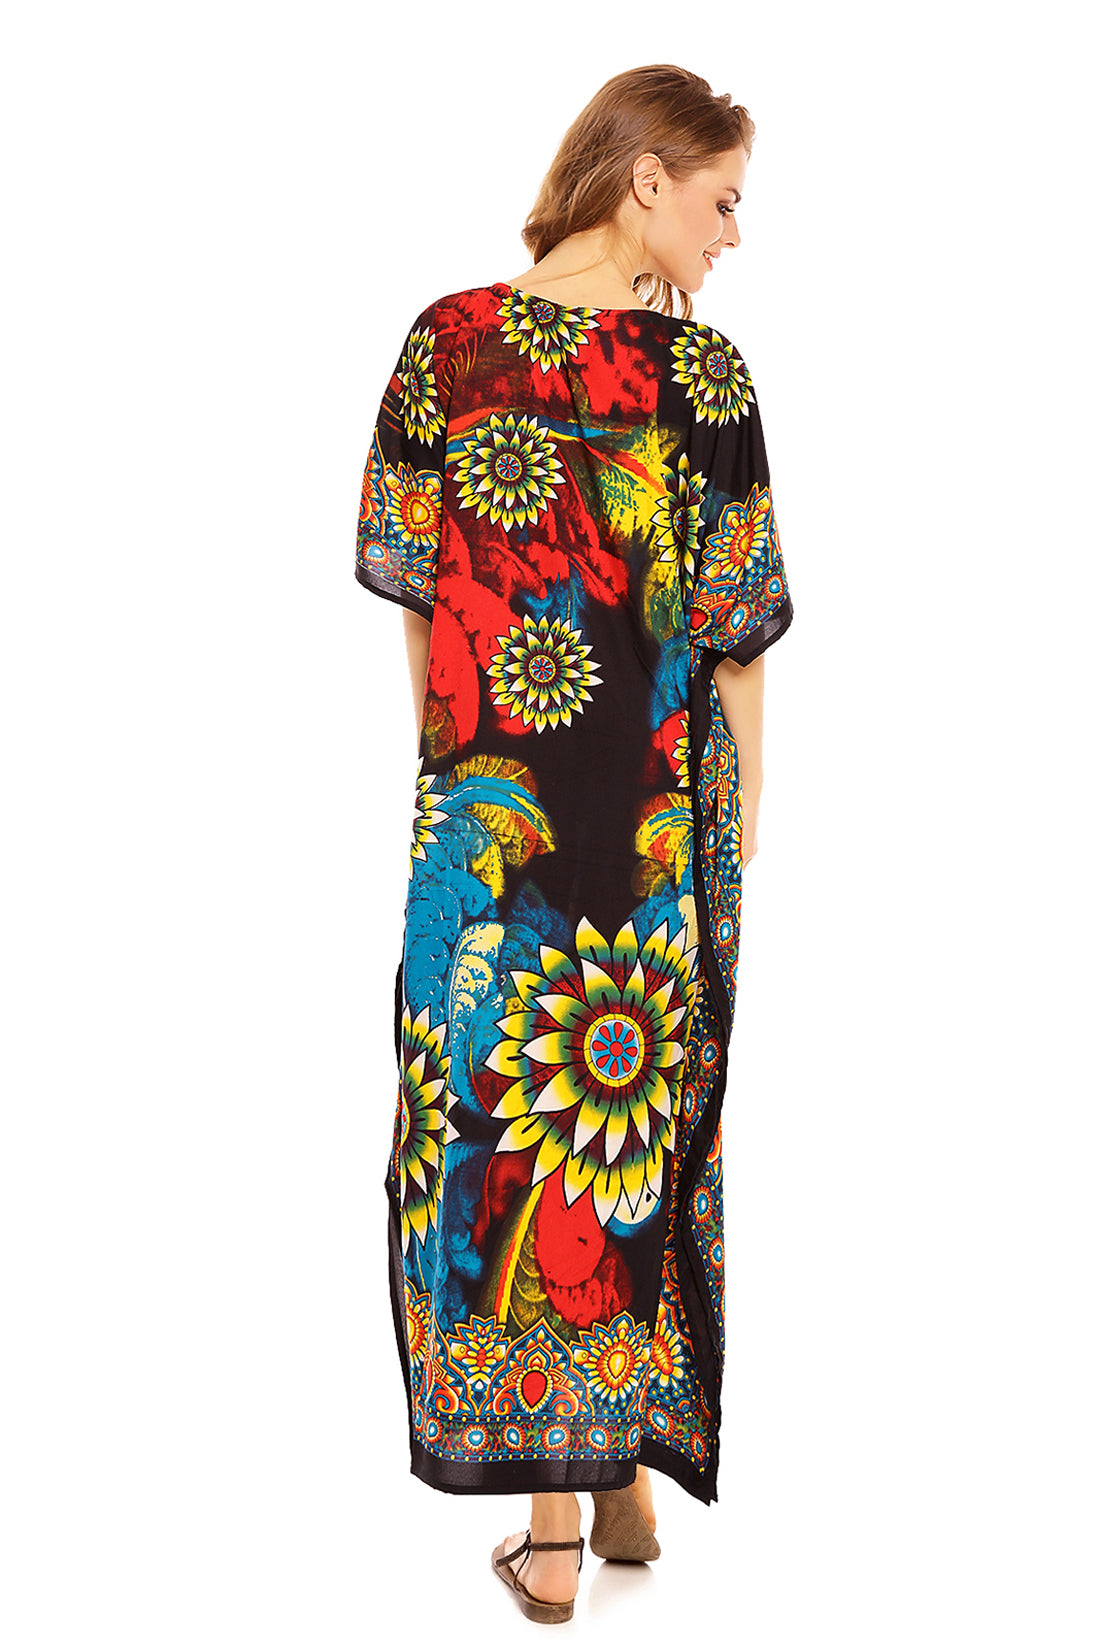 Ladies Full Length Maxi Kaftan Floral Dress